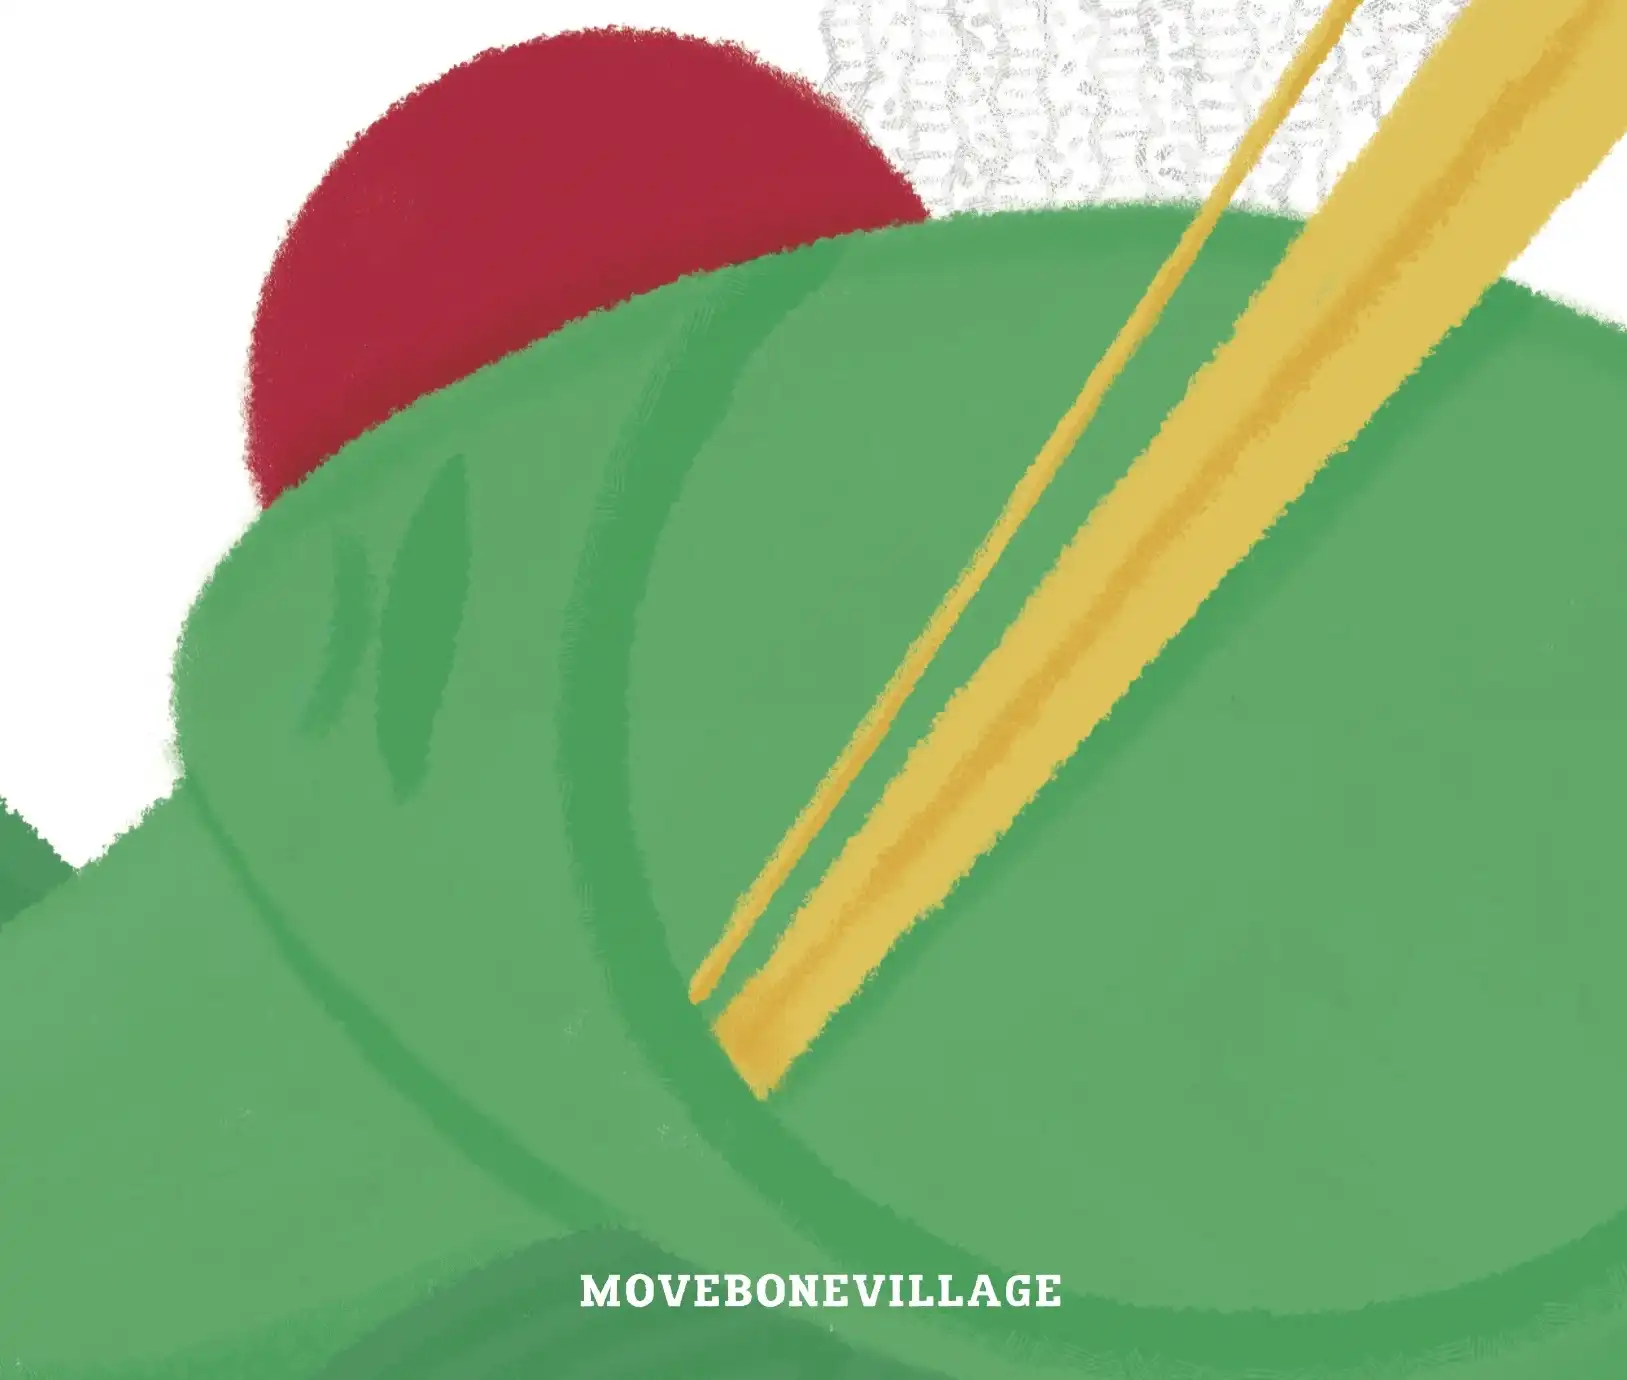 DJ BONE VILLAGE (CIRCLE) / MOVE